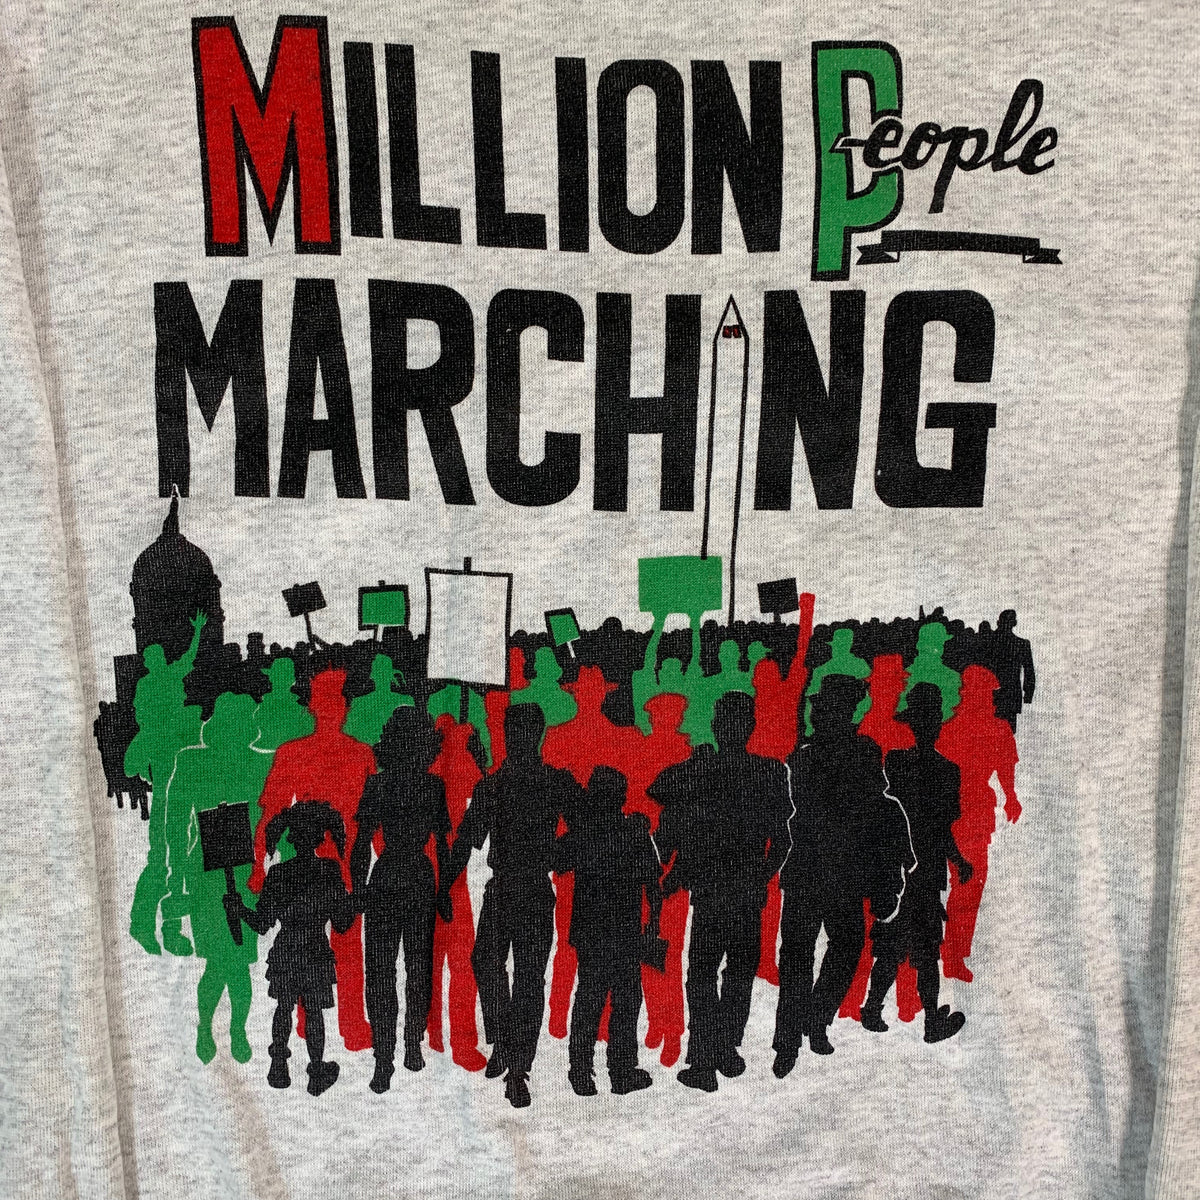 Vintage Million People Marching &quot;DC&quot; Crewneck Sweatshirt - jointcustodydc